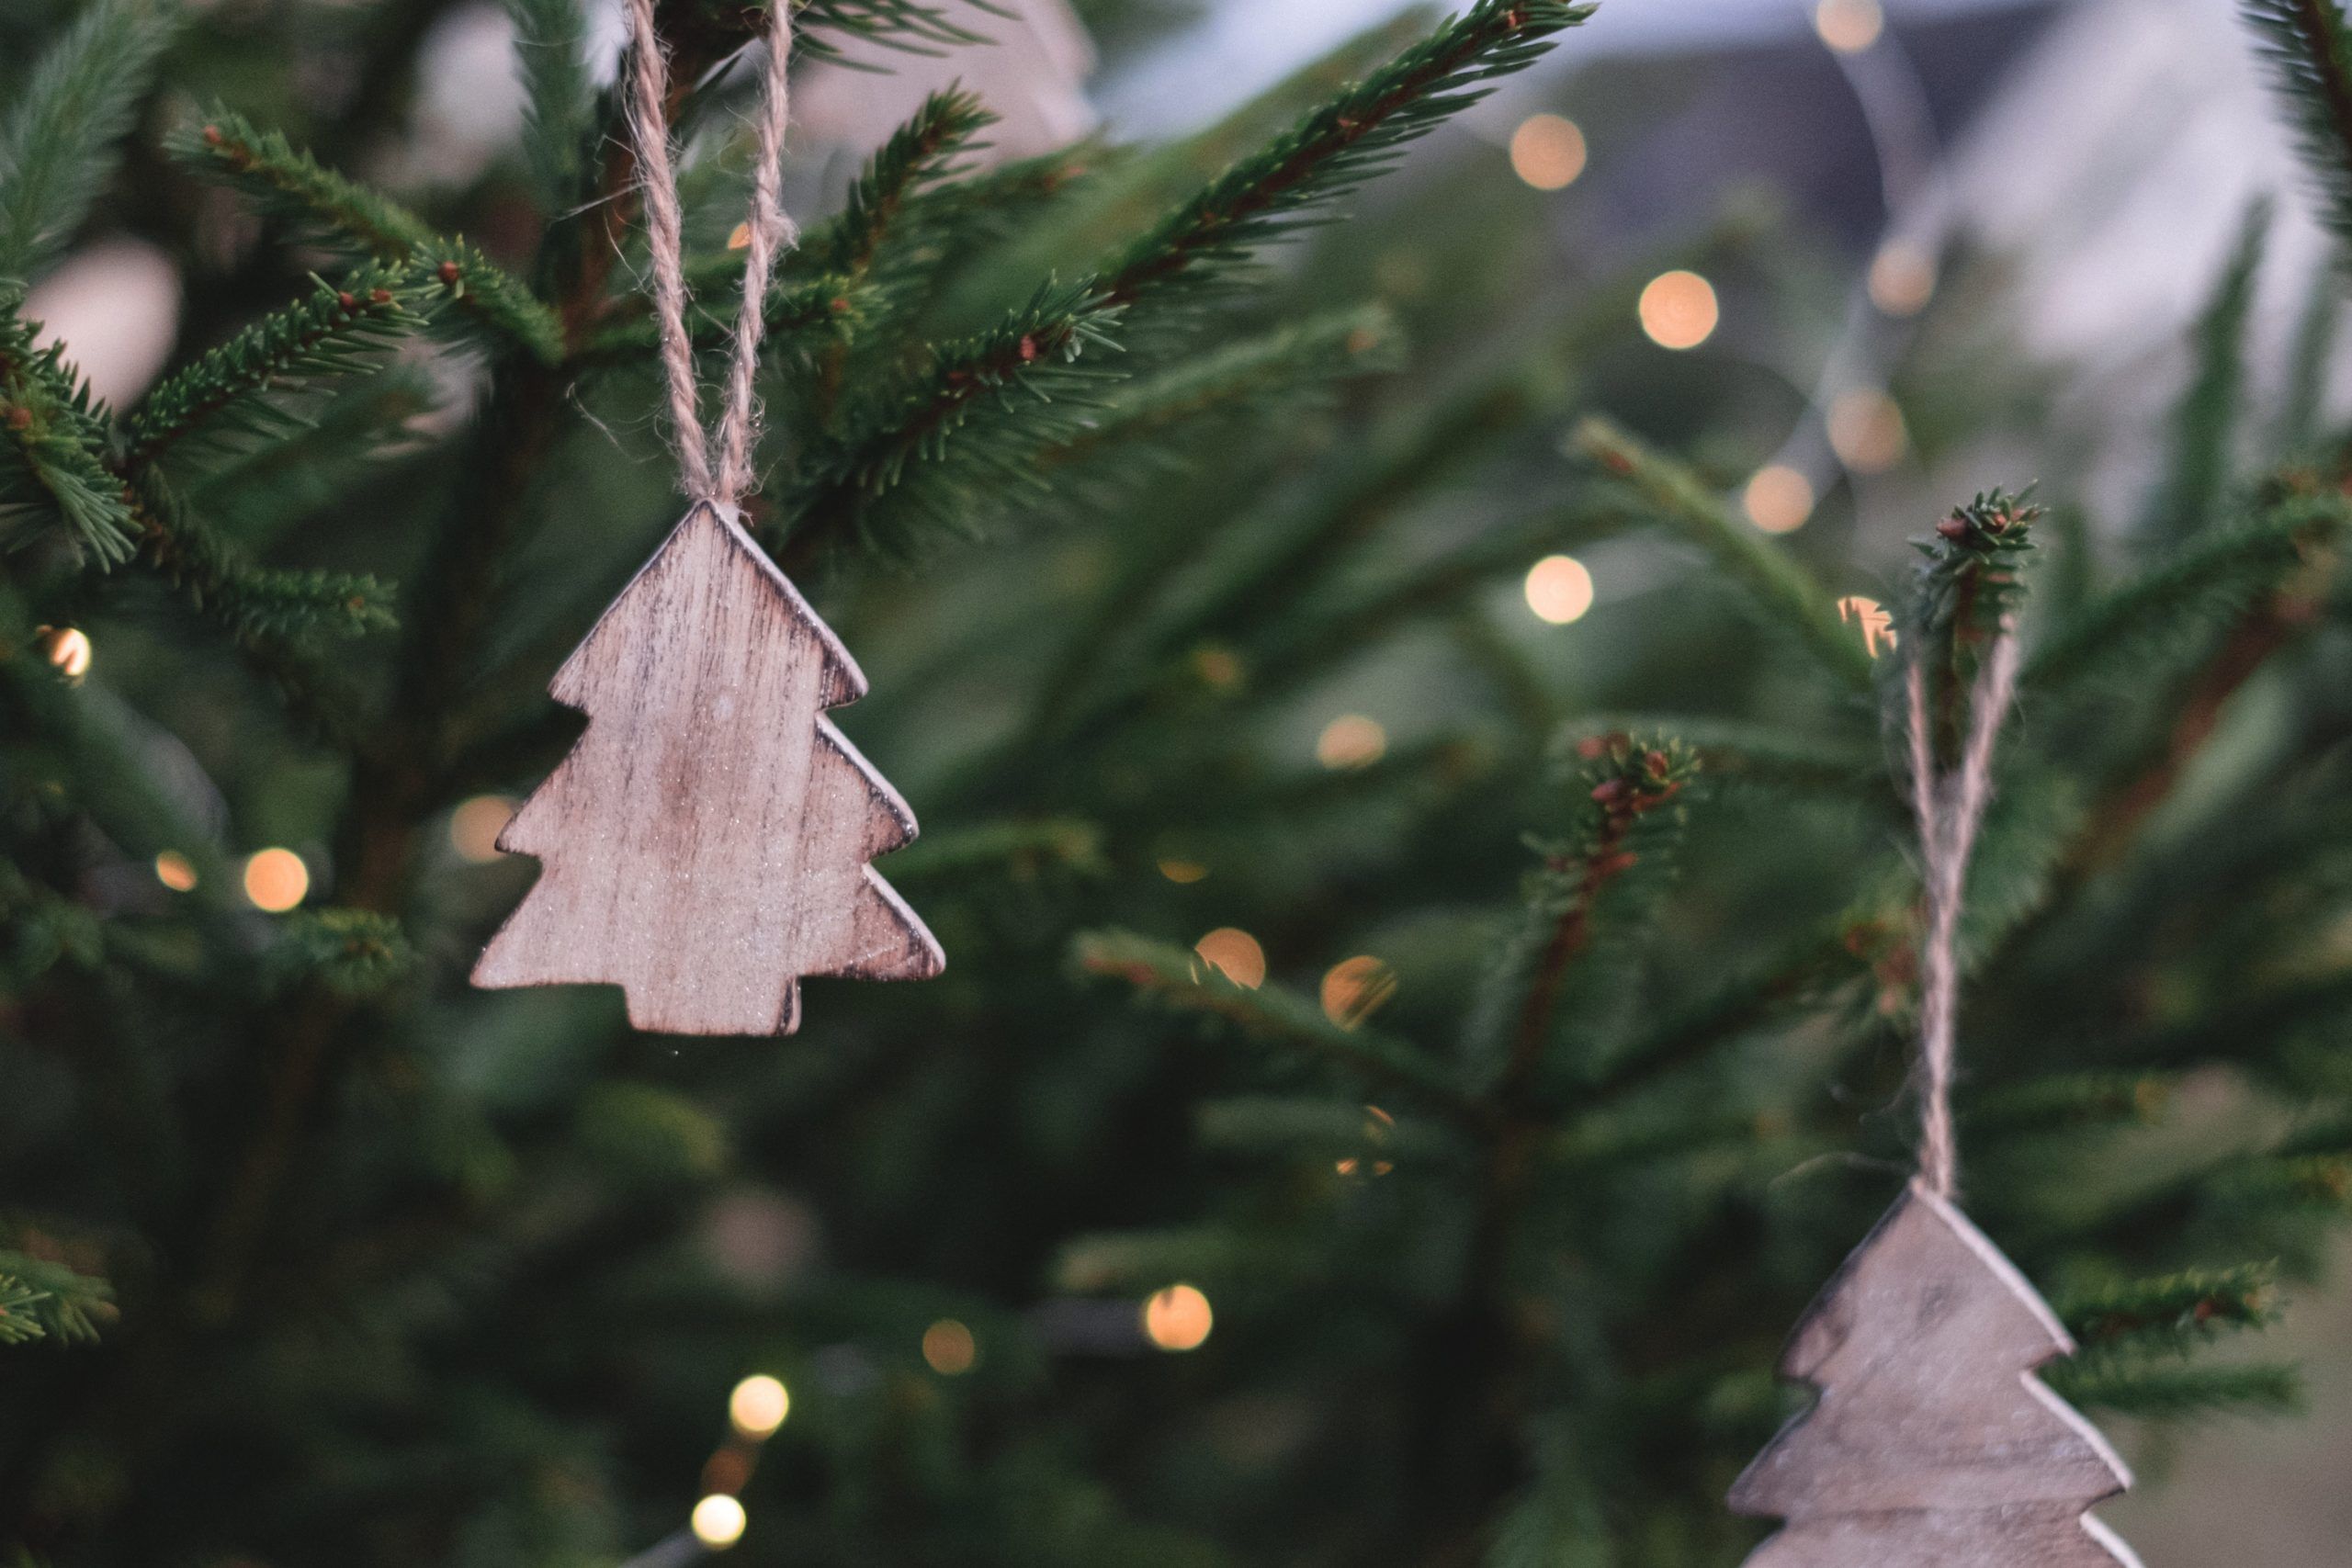 Plastic-free Christmas tree decorations